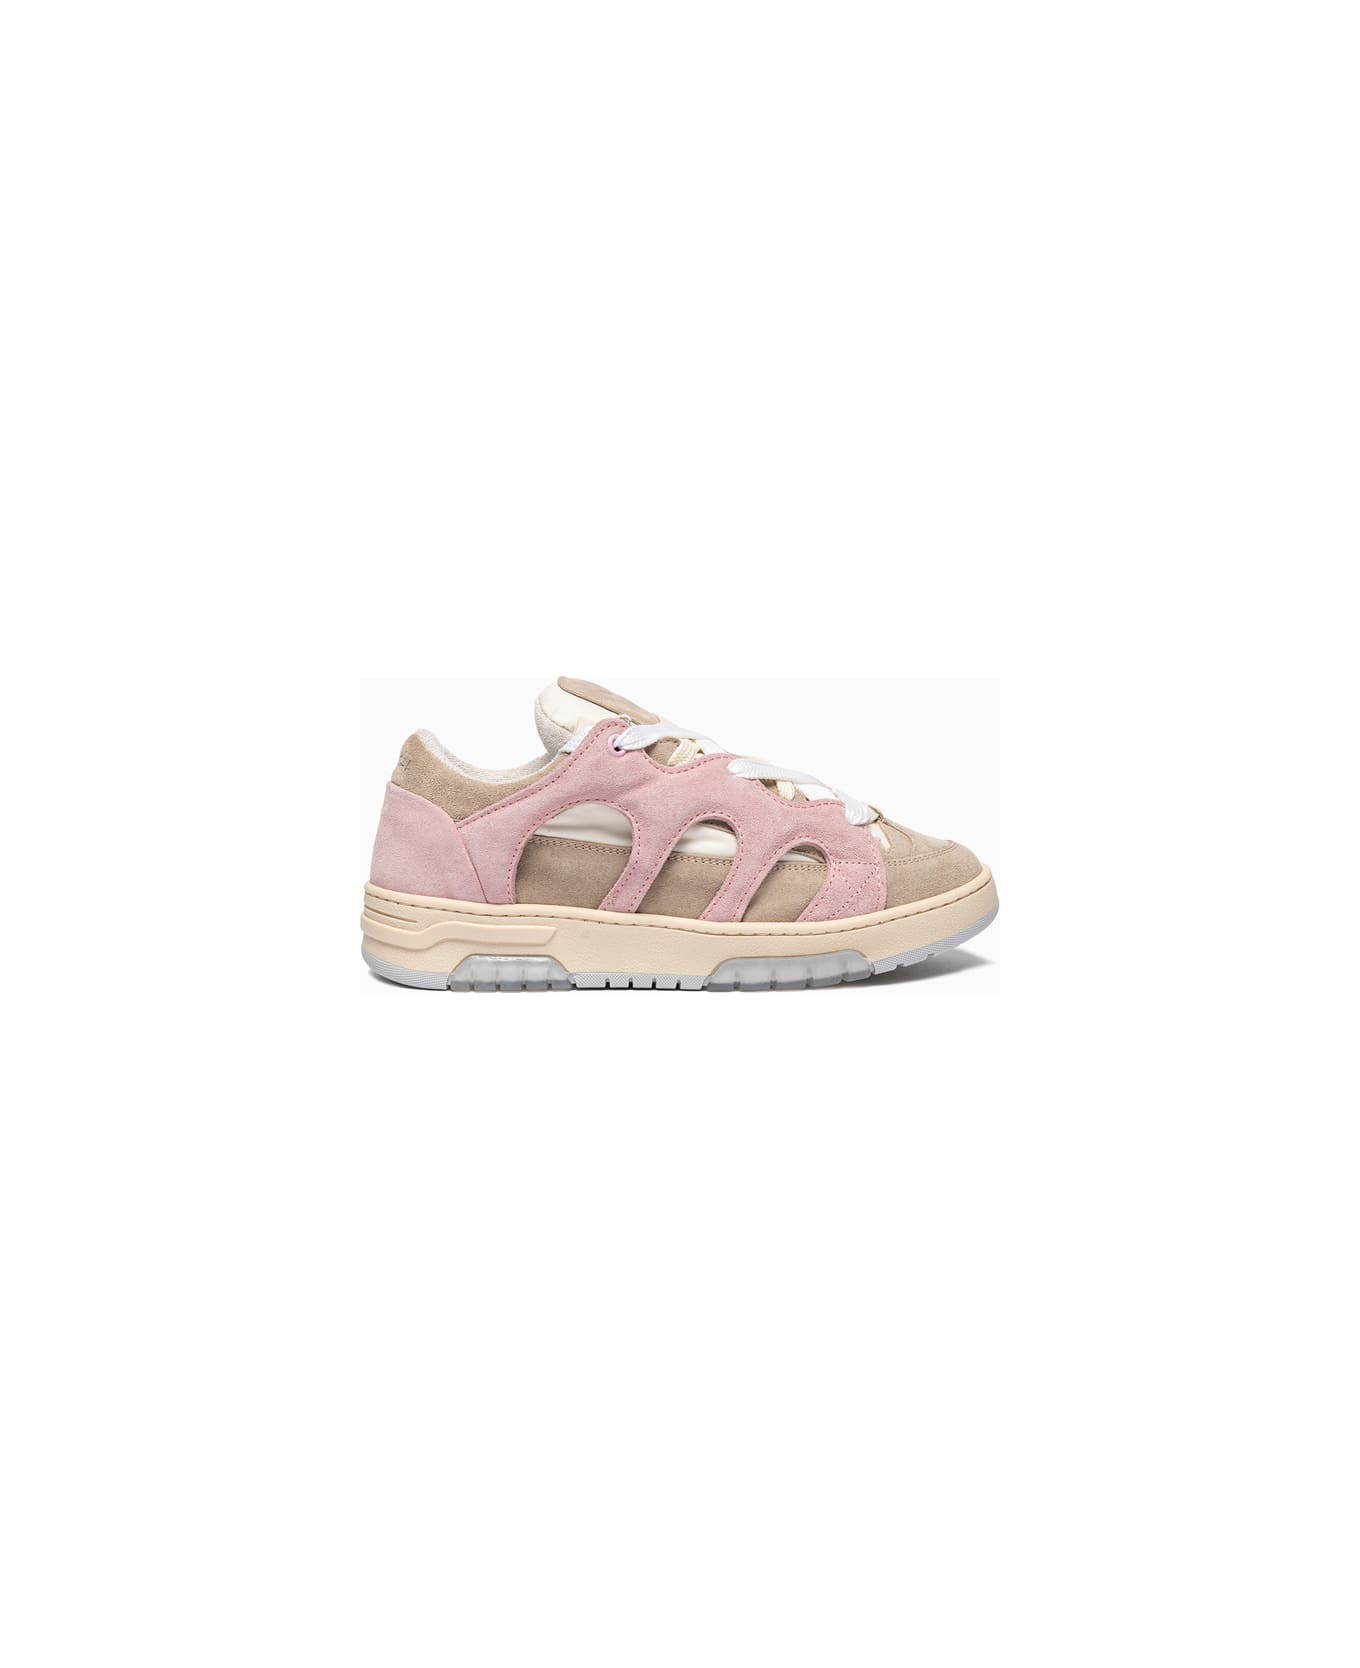 Paura Santha Sneakers - Pink/dove スニーカー